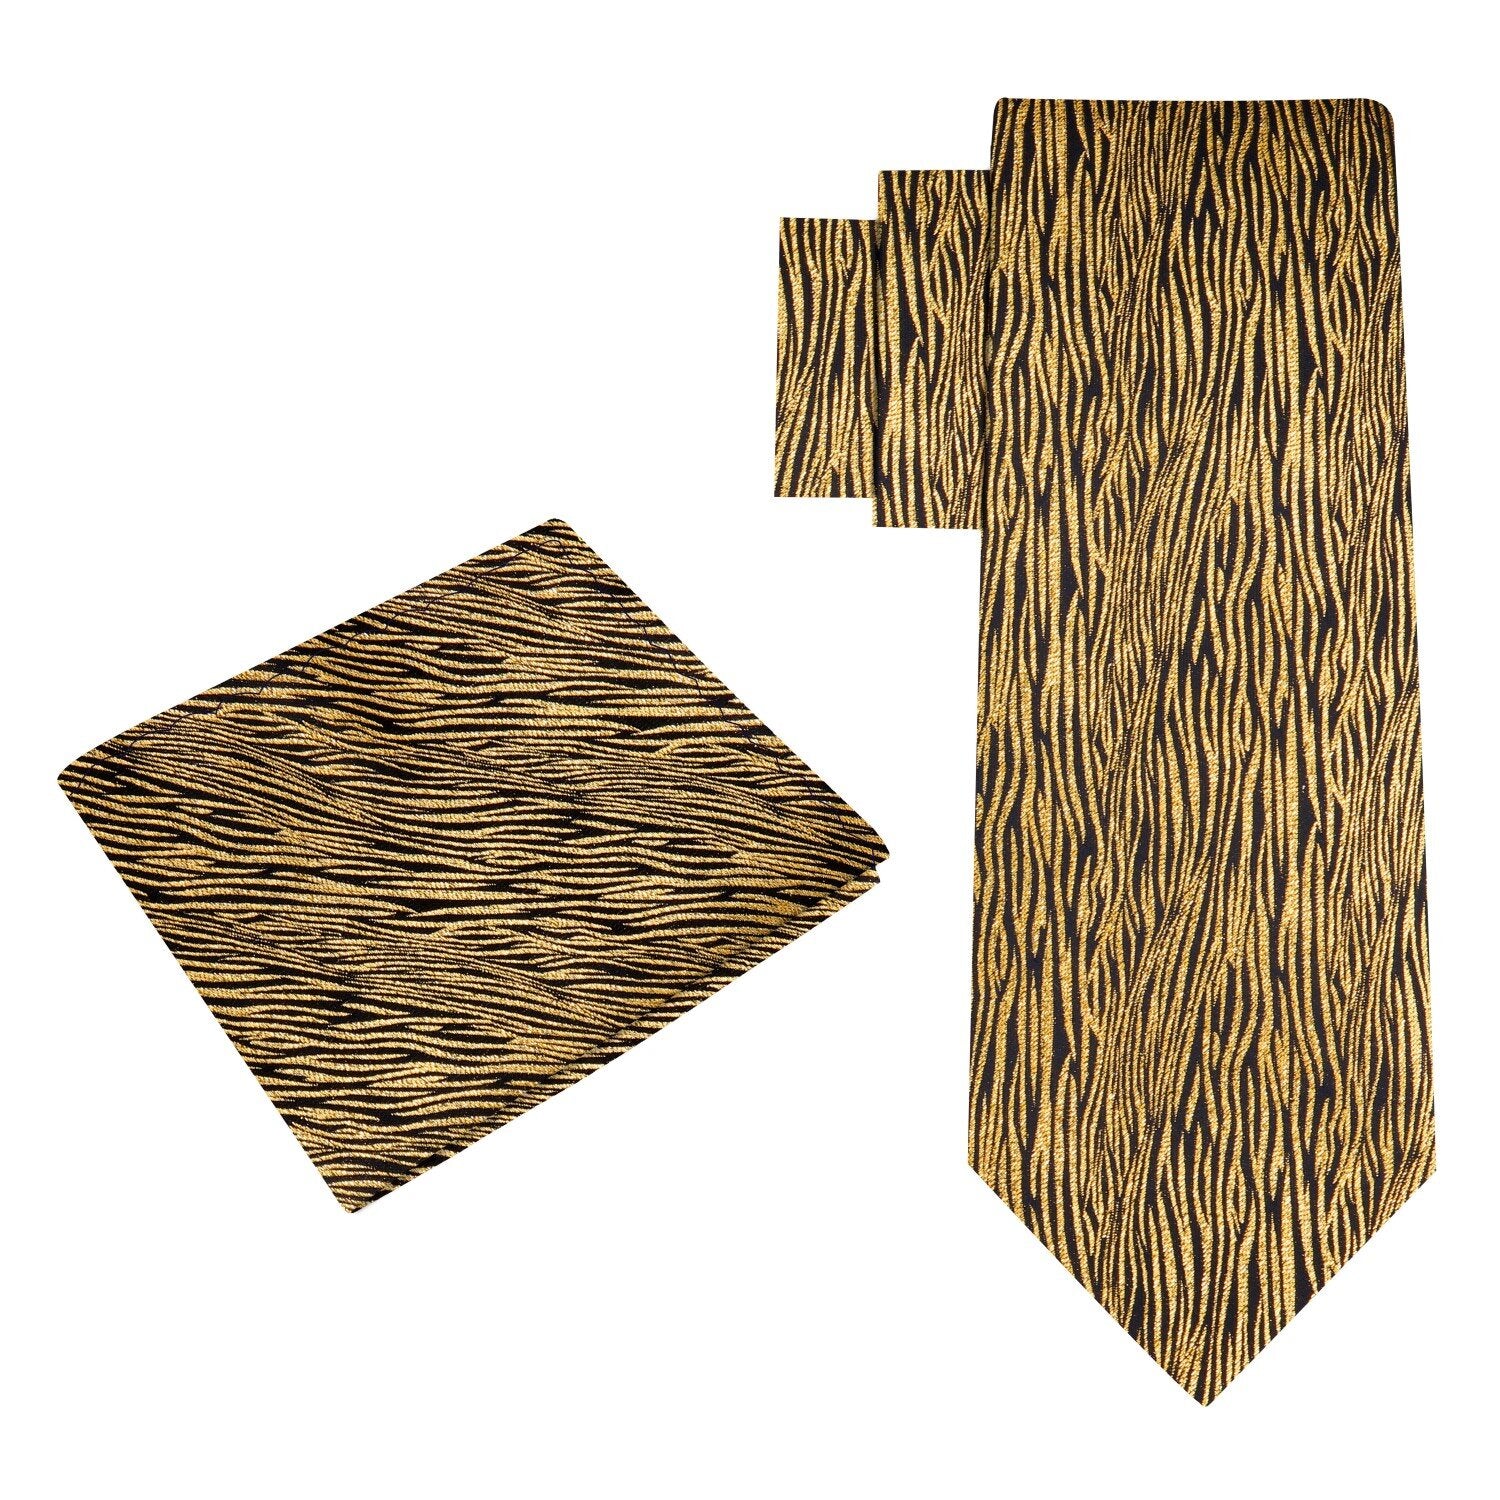 Alt View: Black Gold Zebra Texture Tie and Square